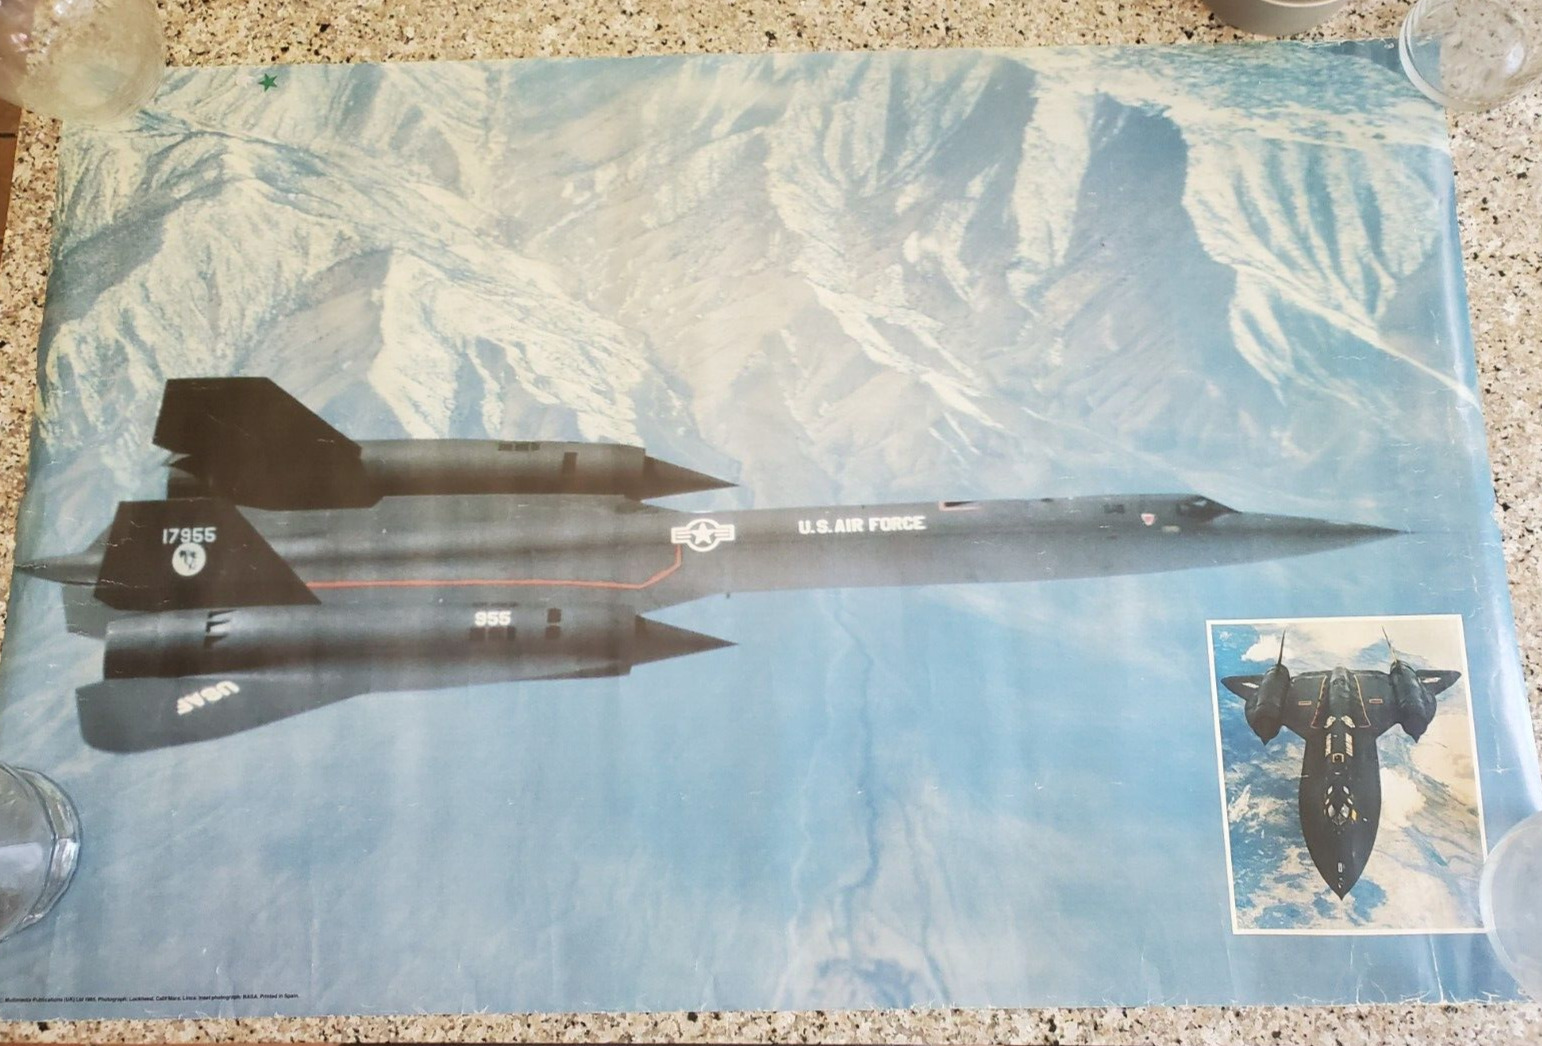 SR-71 Blackbird Rare Vintage 1985 Poster Military Air Force Plane Stealth Jet